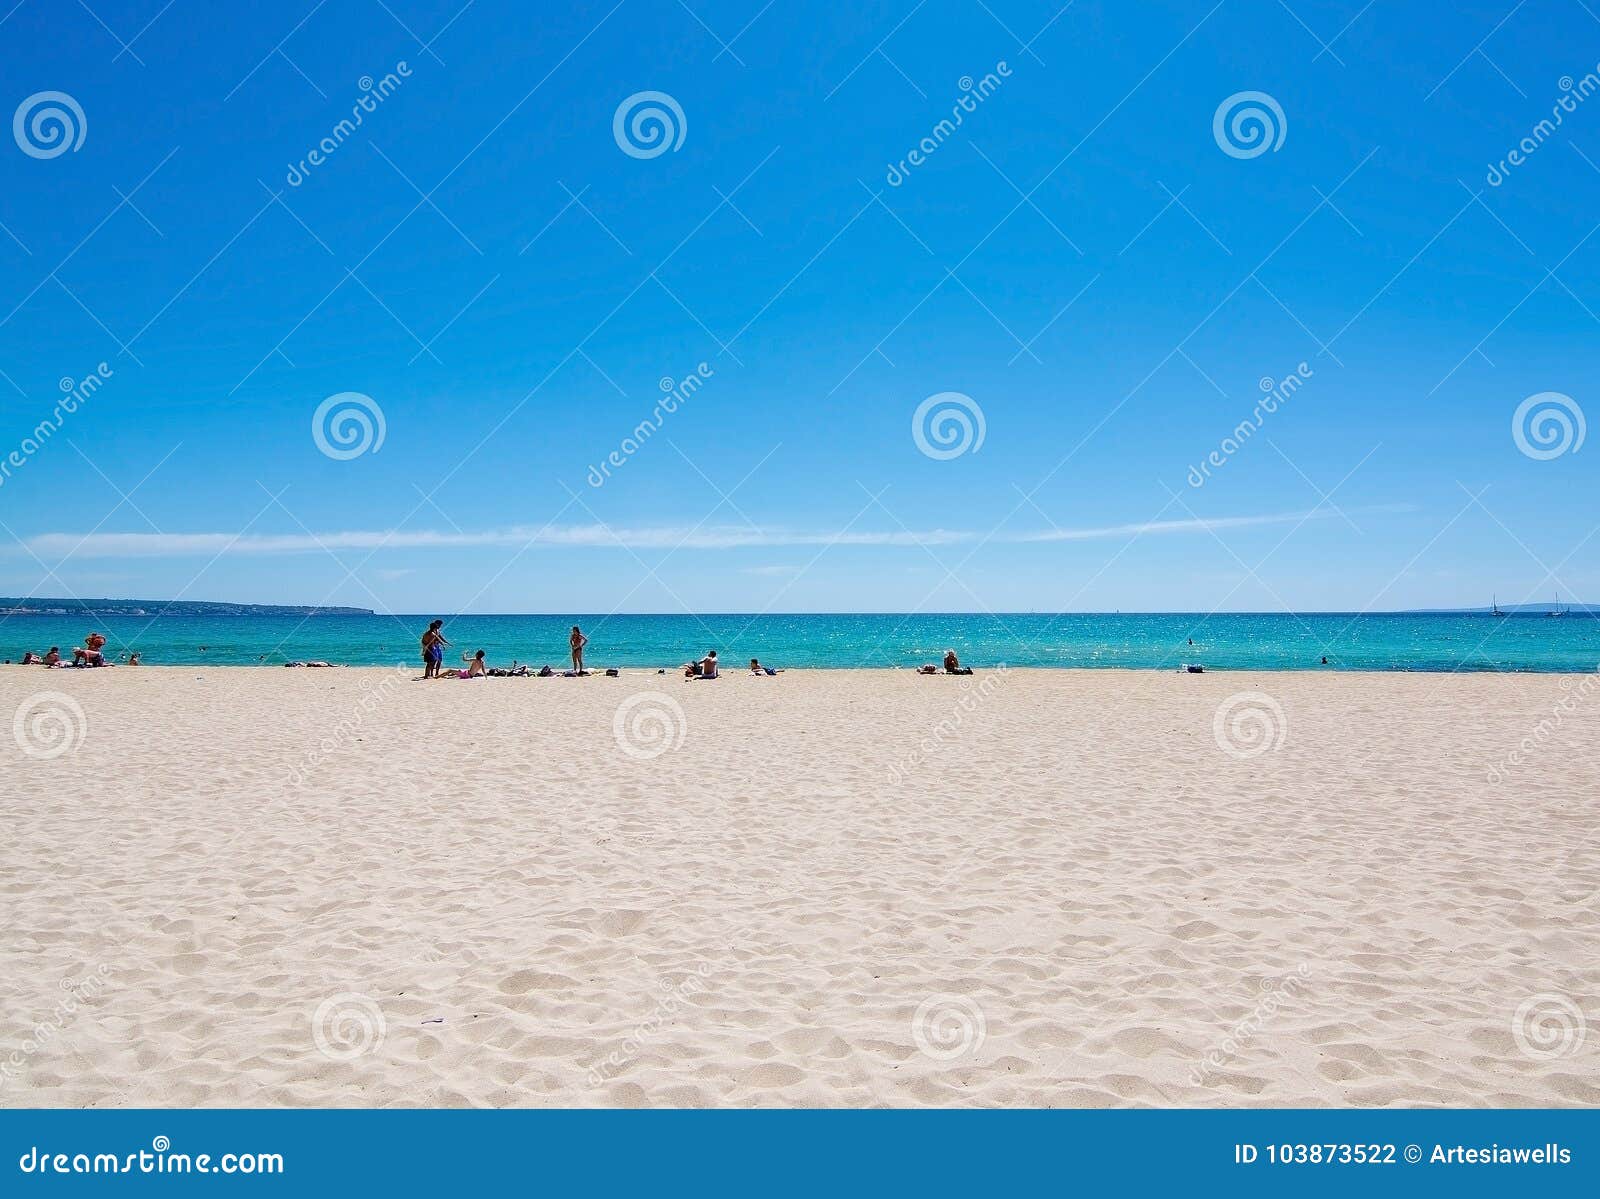 Playa De Palma Beach Editorial Photography Image Of Outdoor